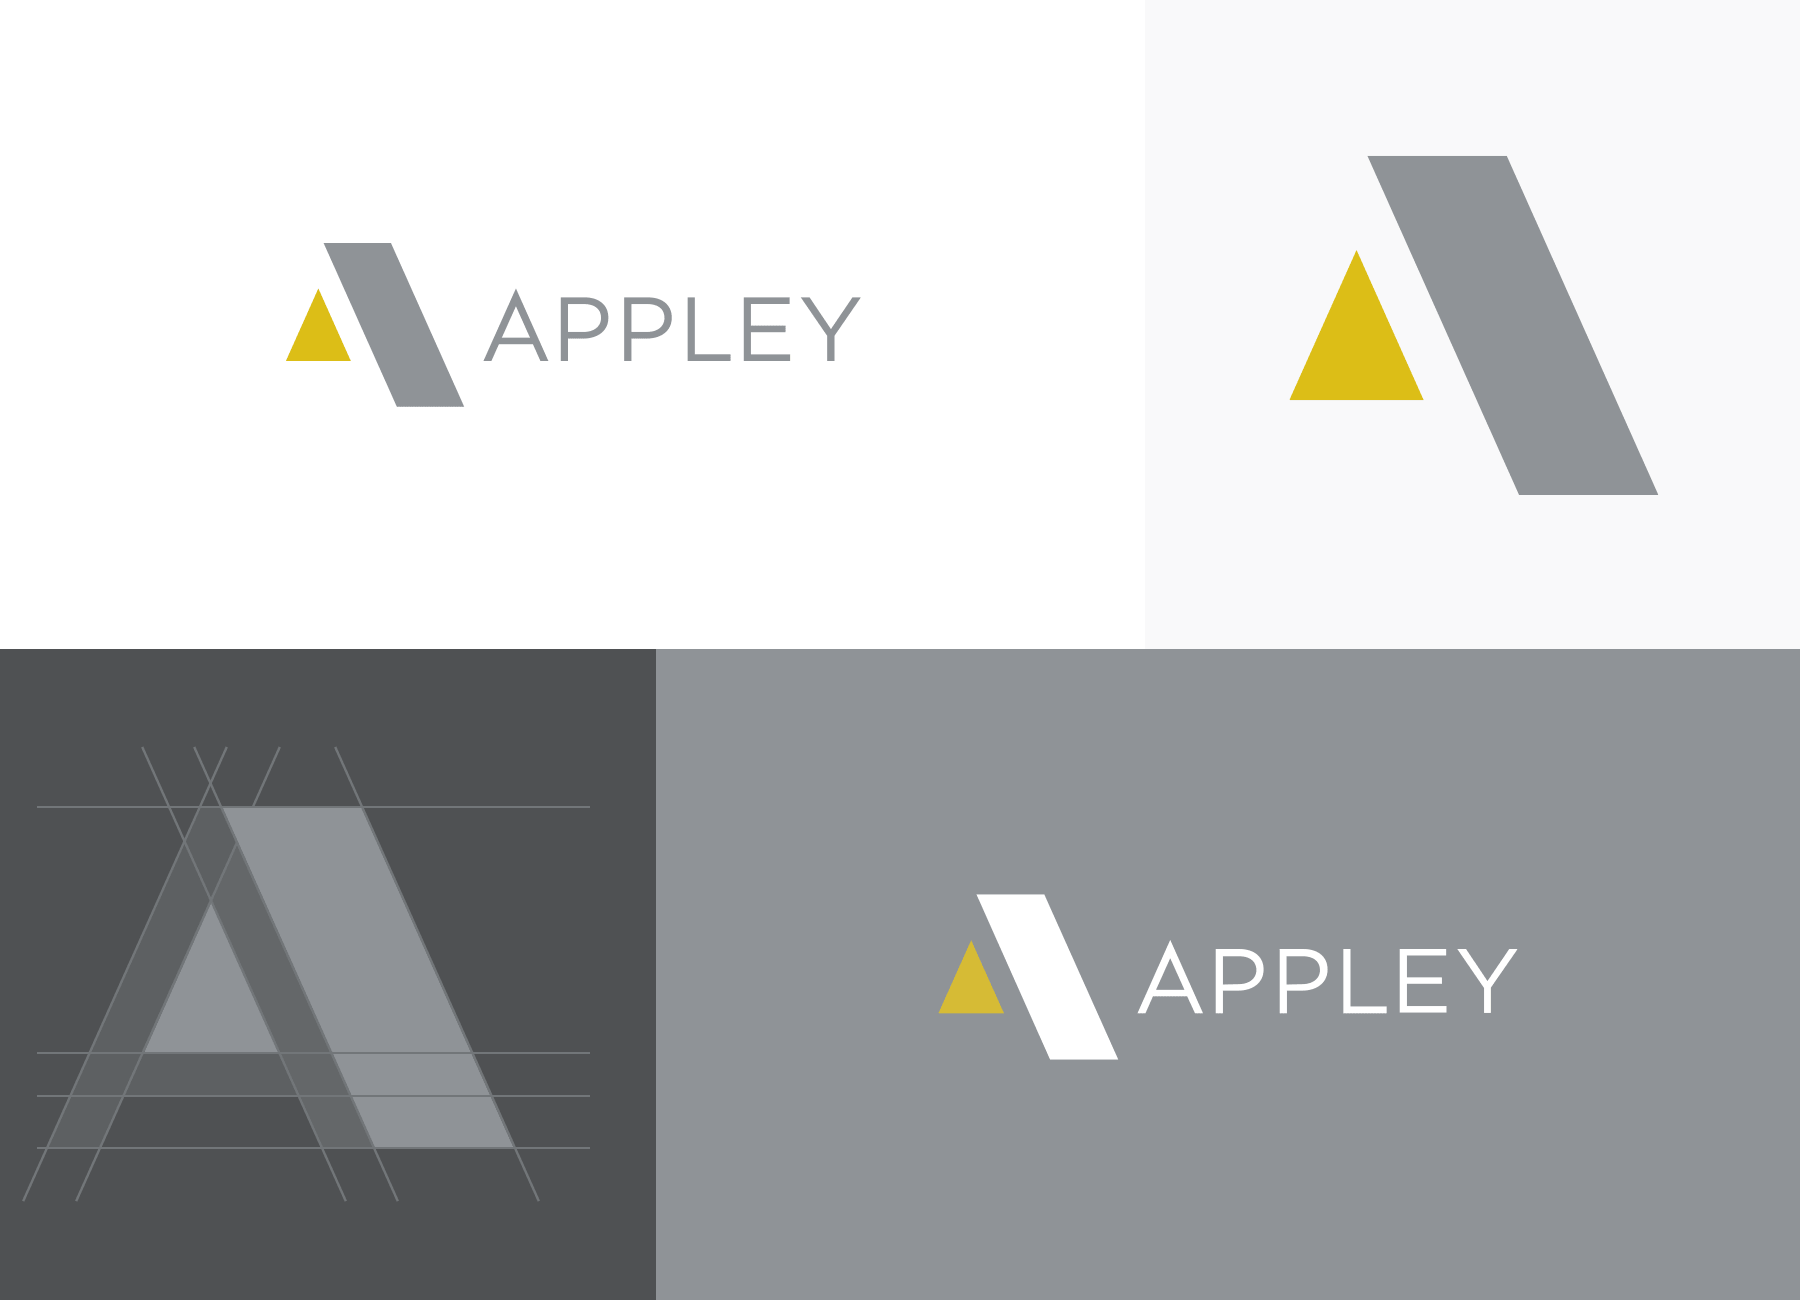 Appley logo